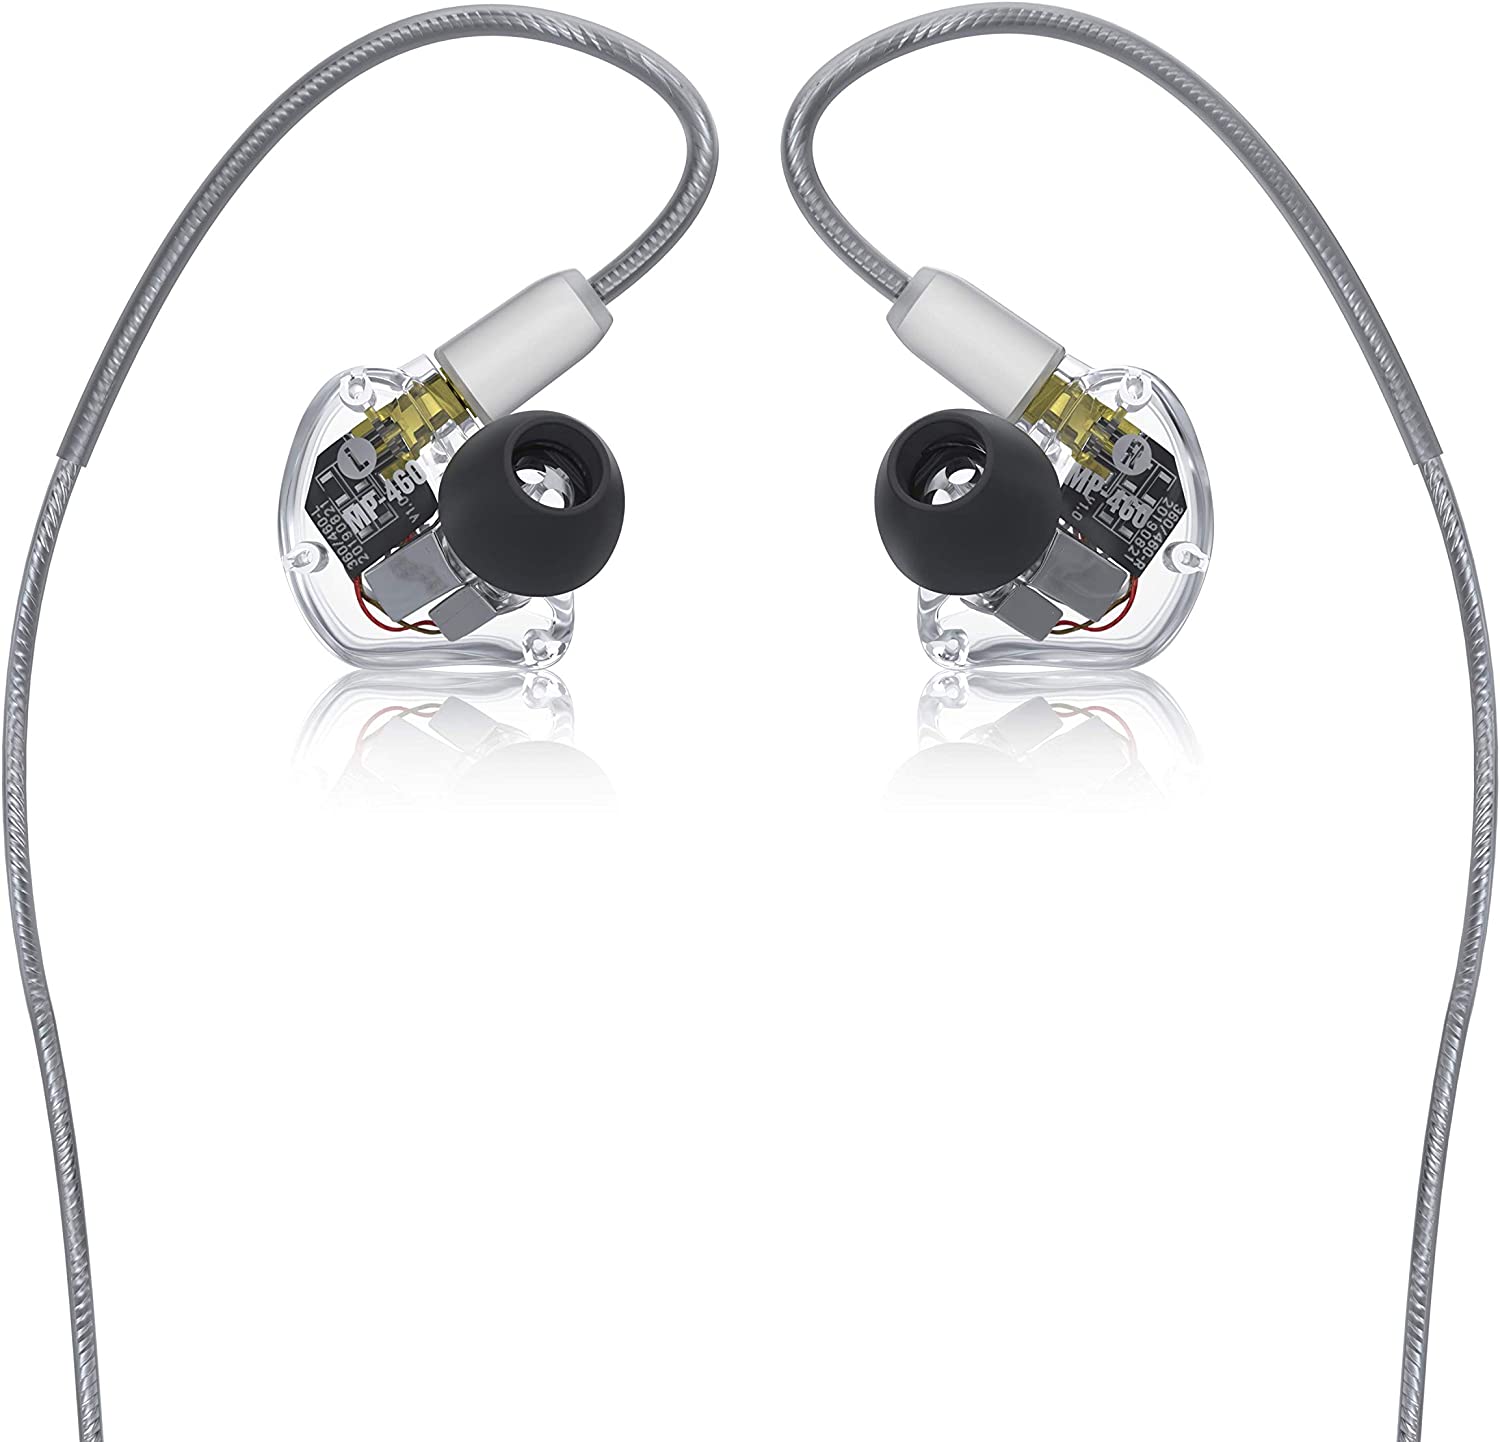 Mackie MP-220 BTA Wireless Bluetooth Dual Driver In-Ear Headphones